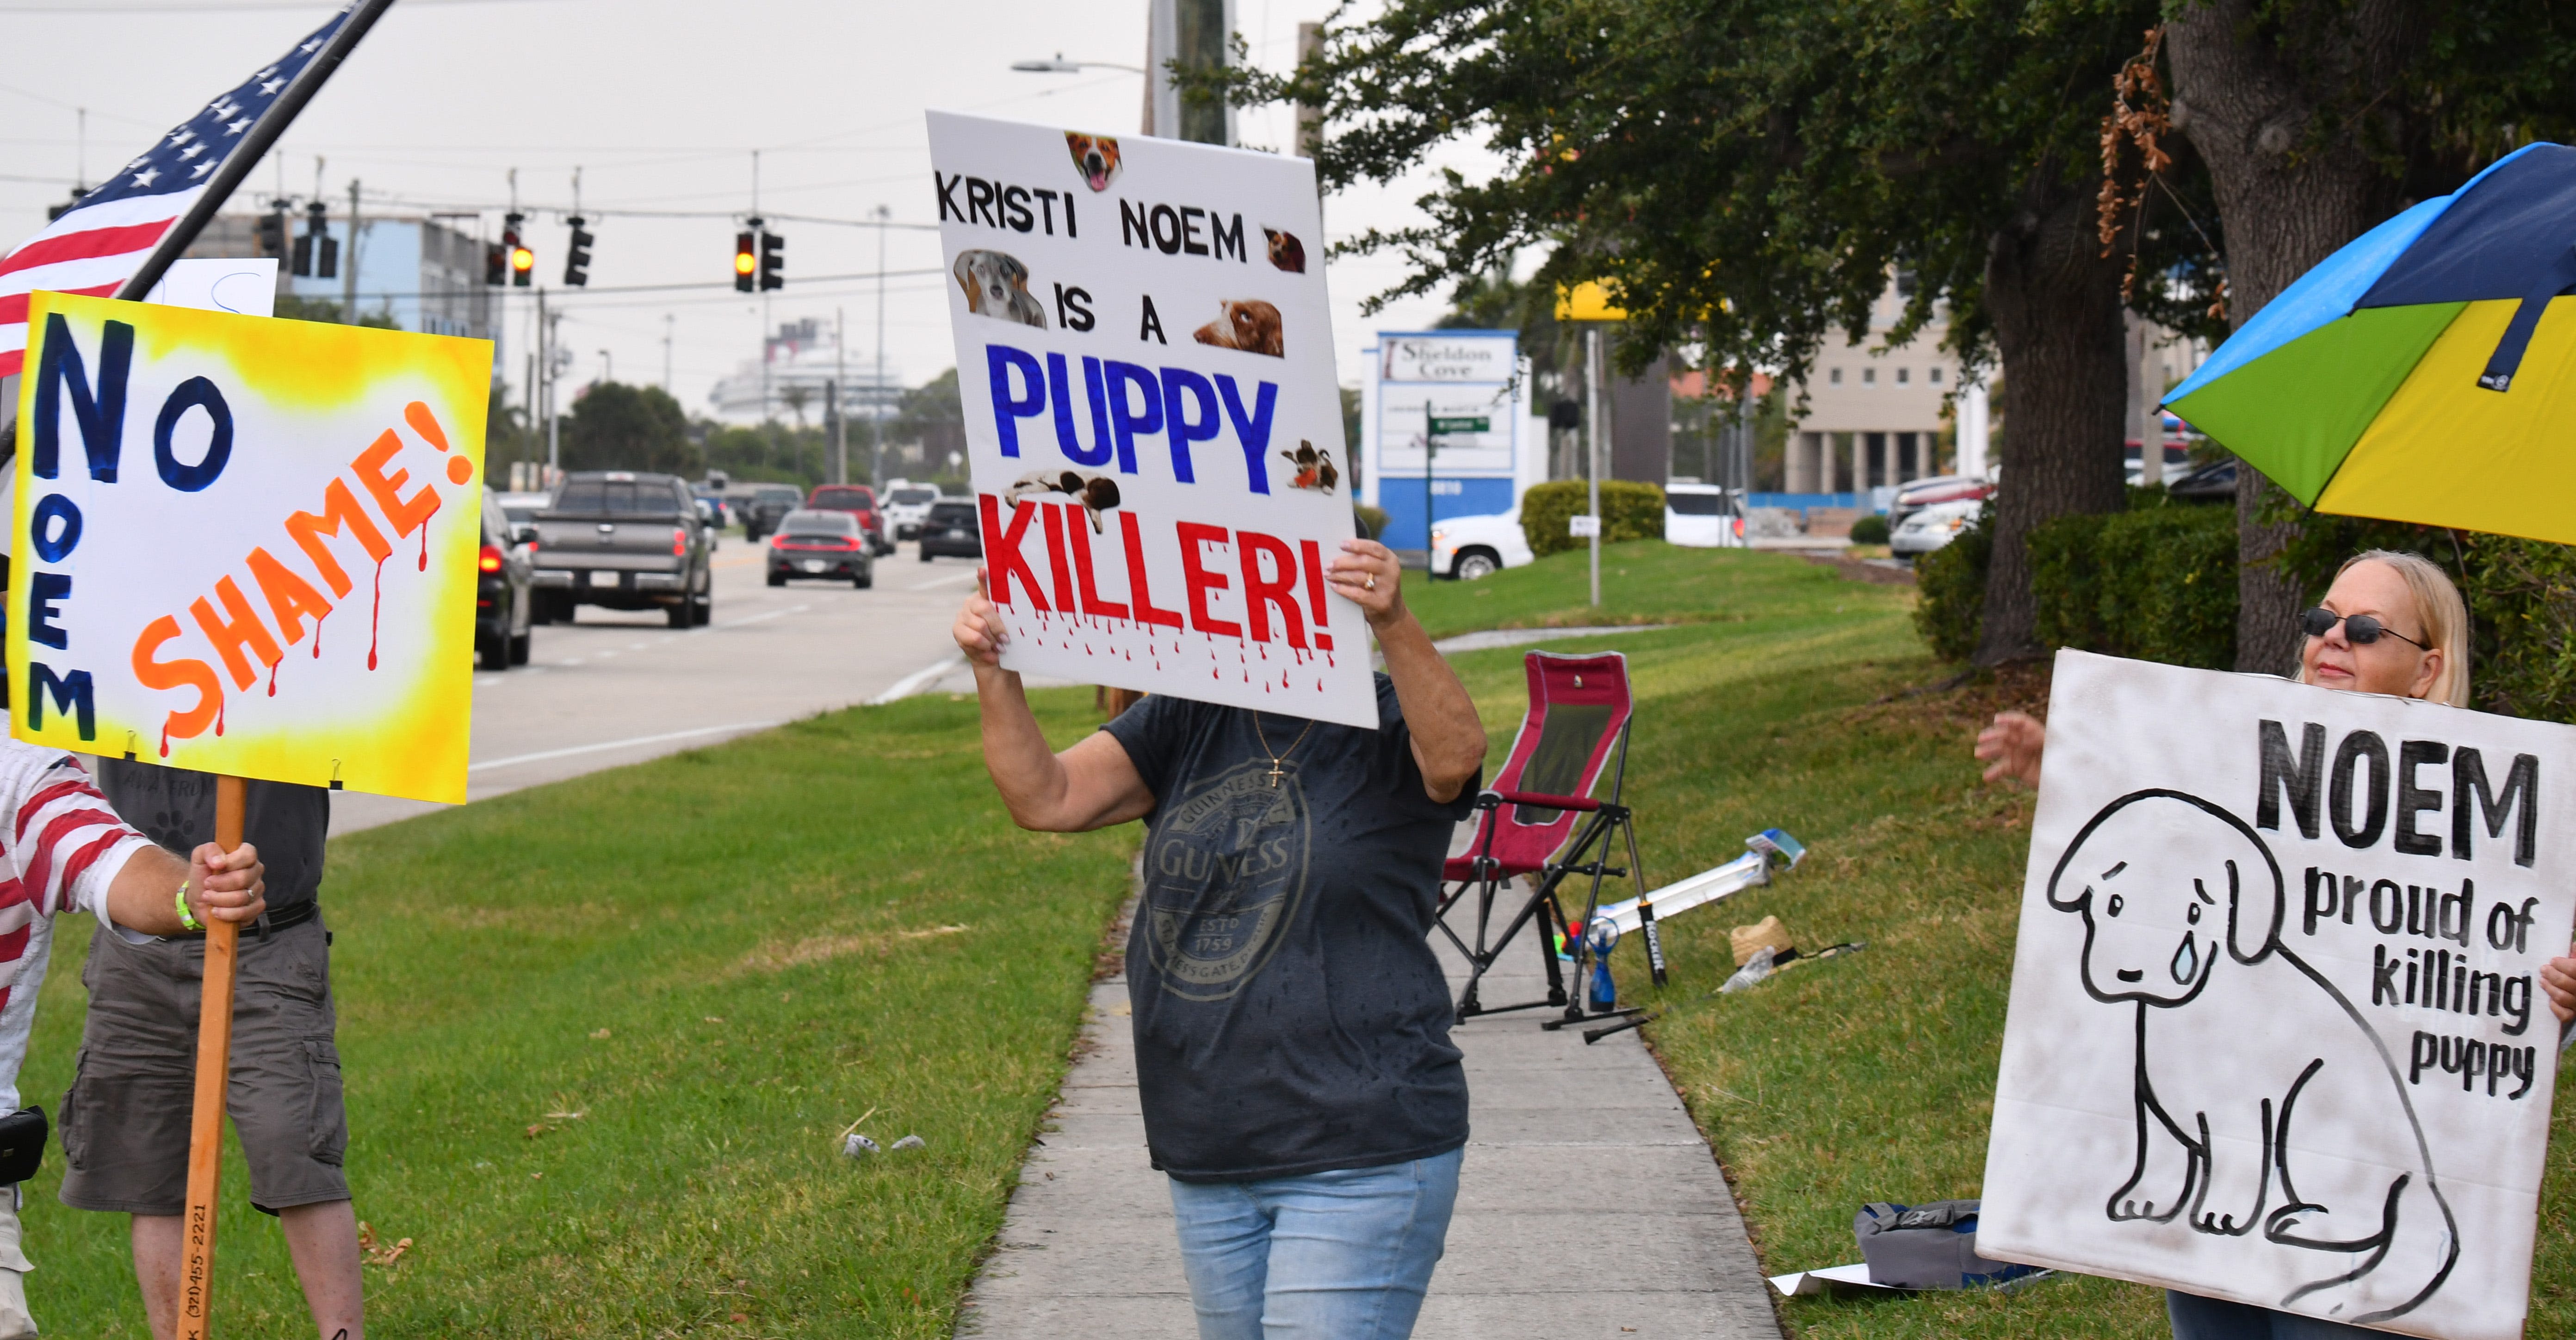 Gov. Kristi Noem draws crowds, protesters to Florida event amid backlash over dog killing